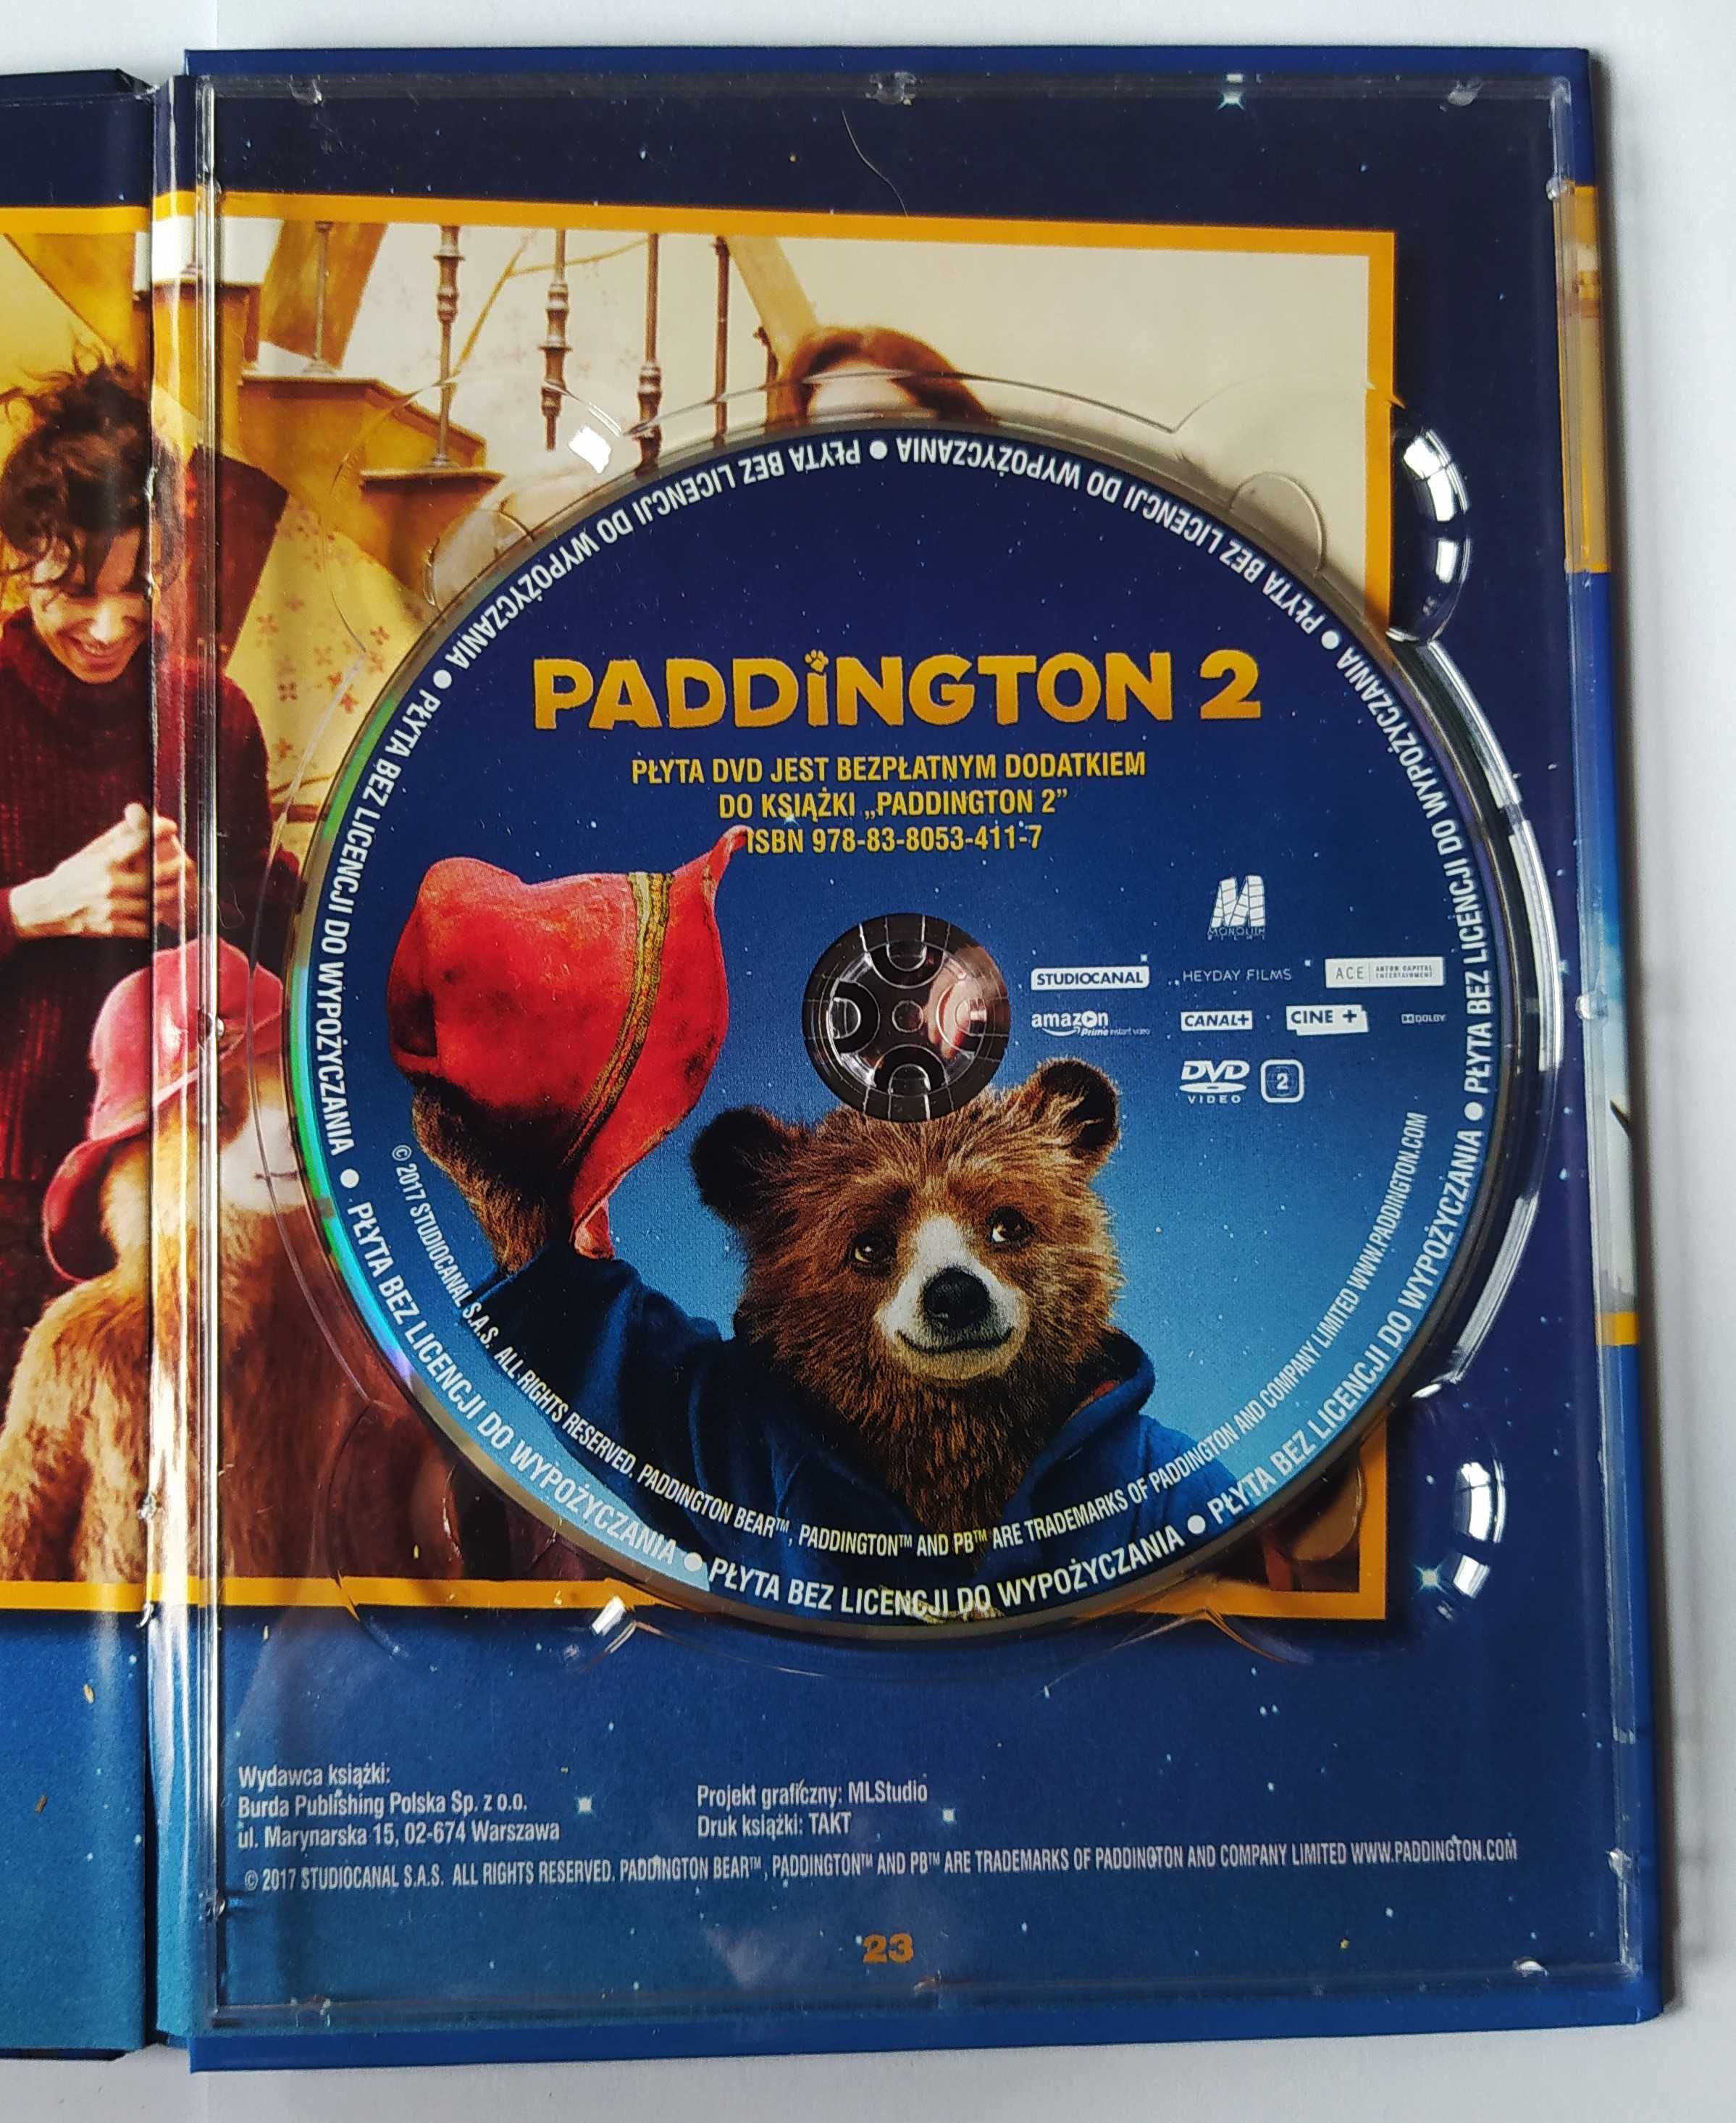 Paddington 2 DVD Booklet